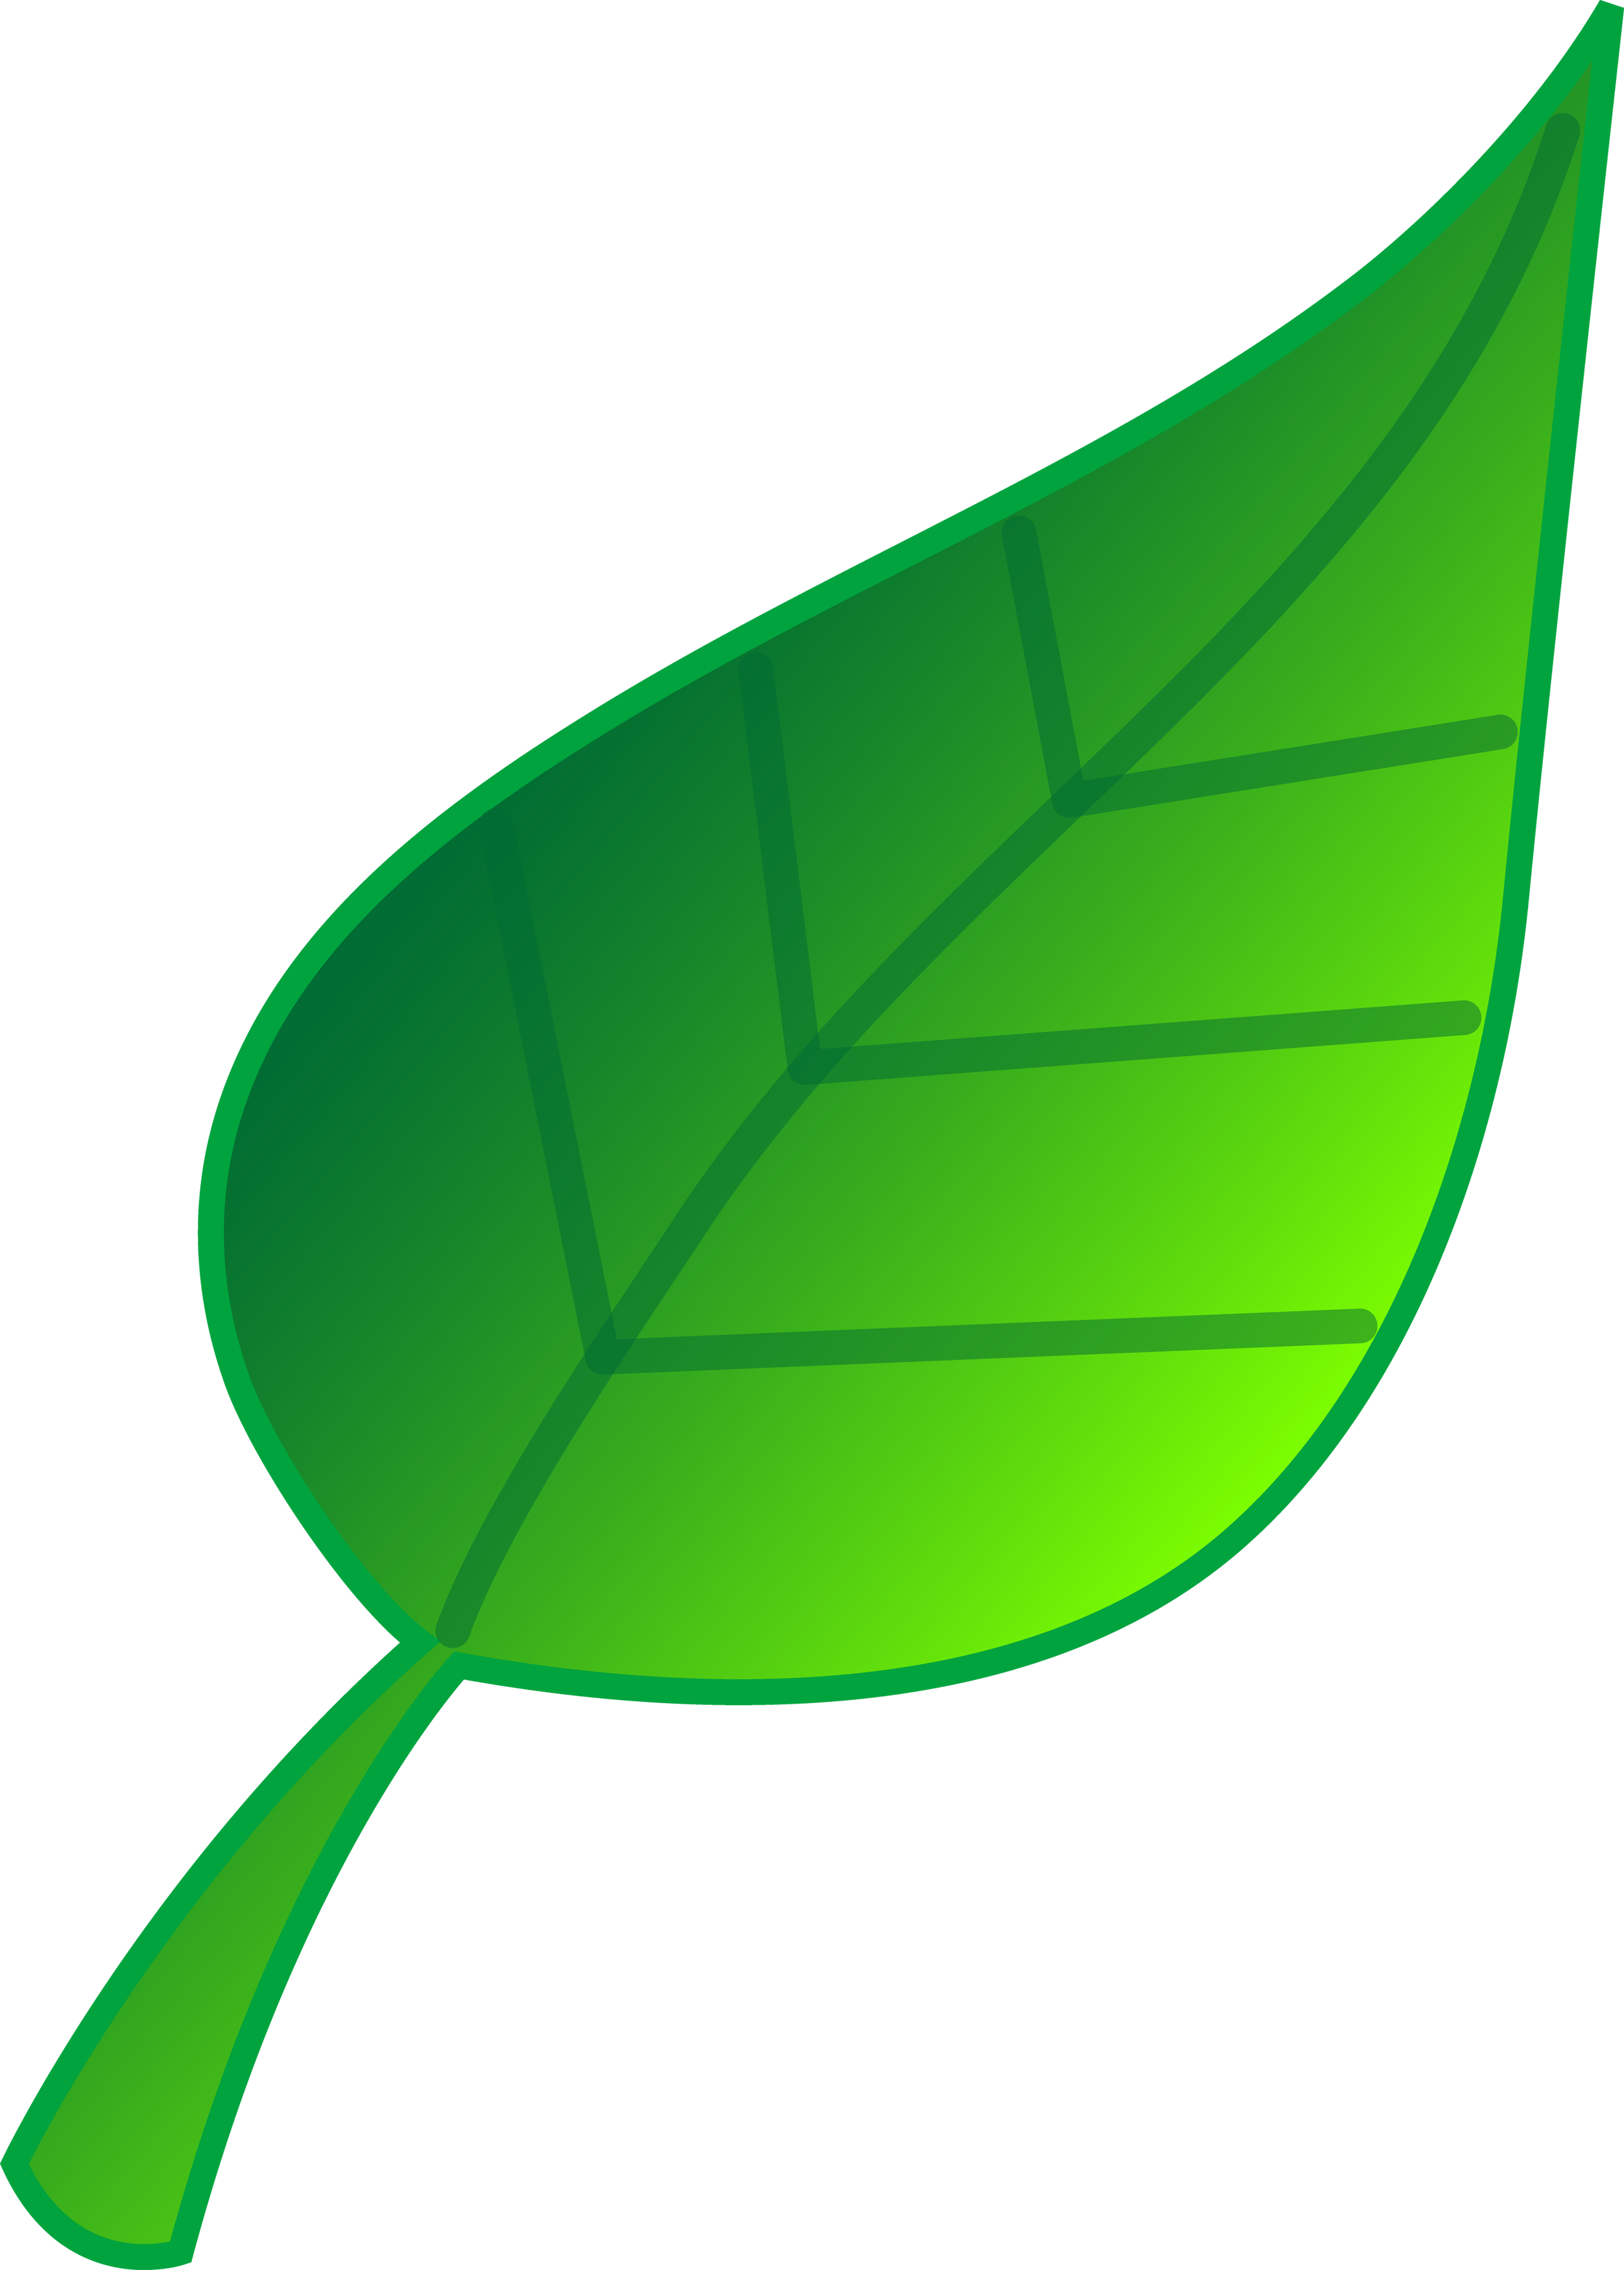 Green leaf clipart.